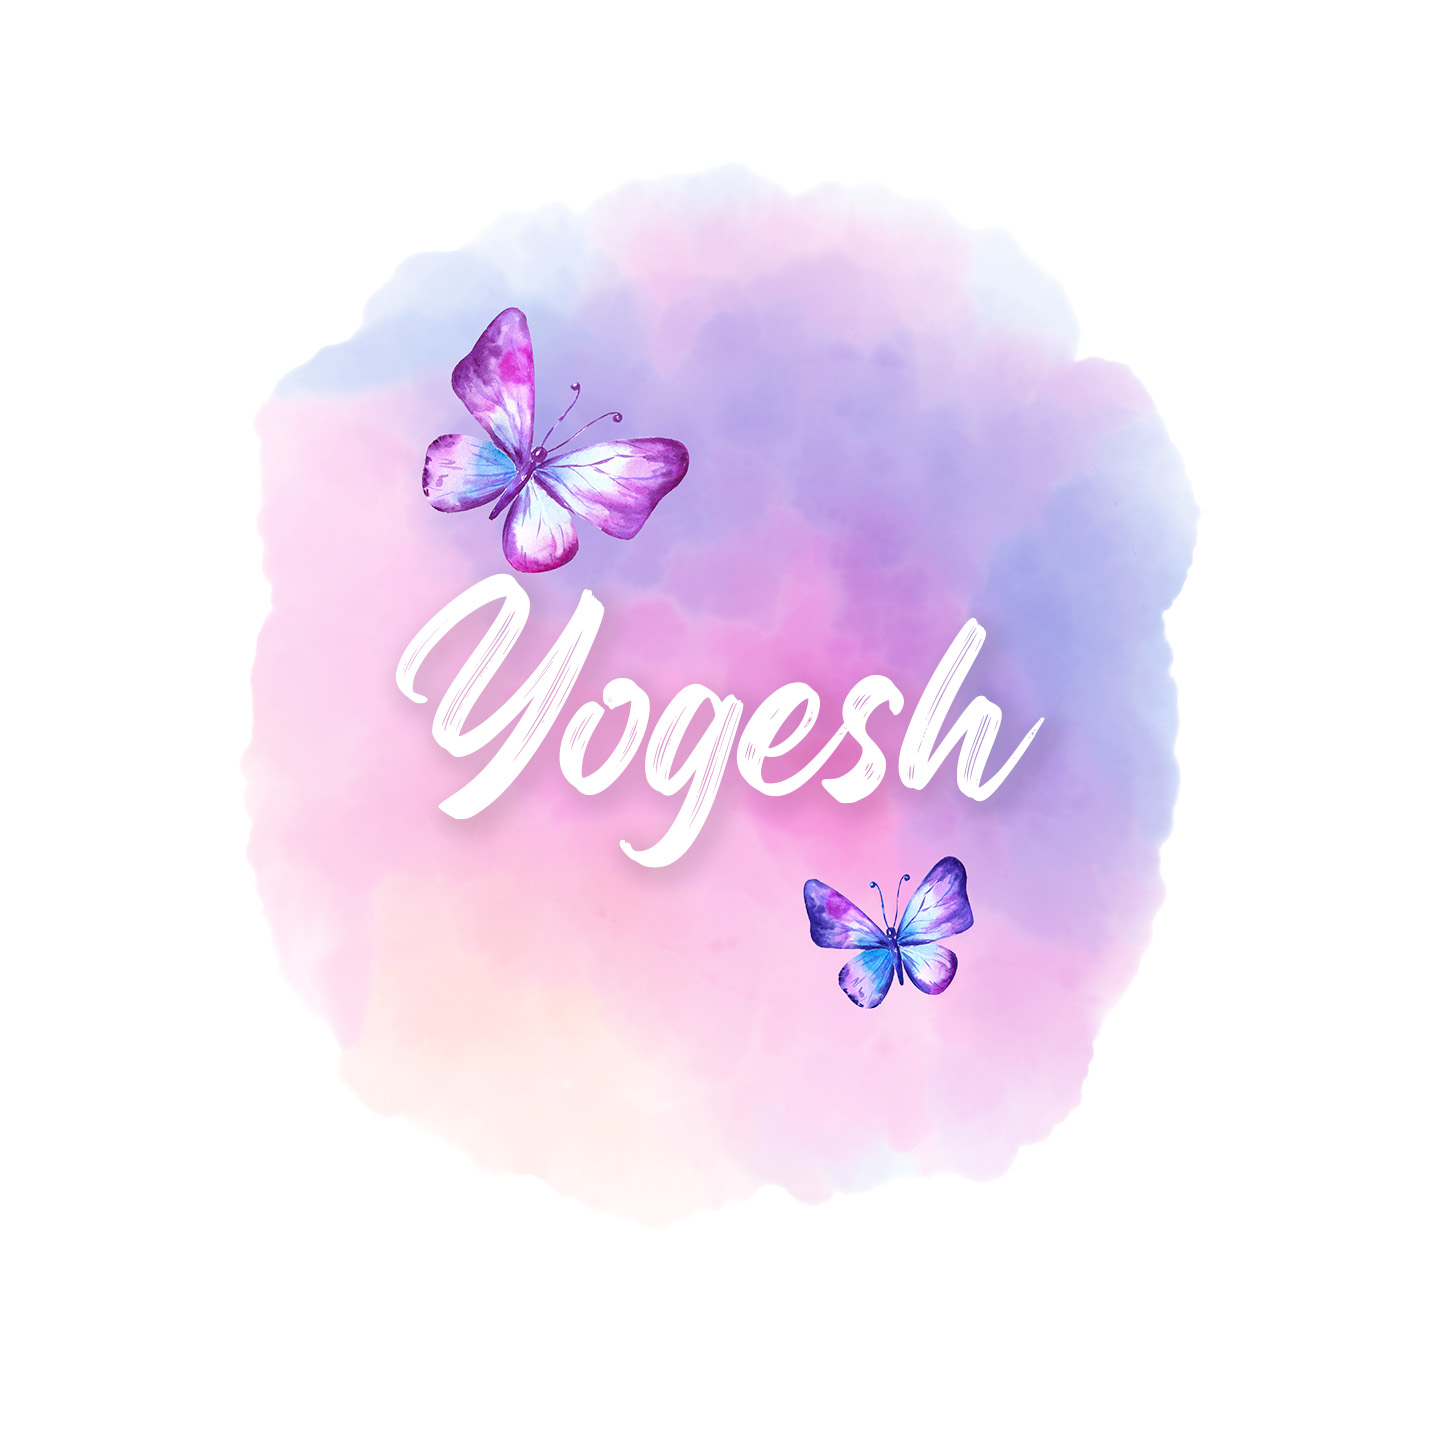 YOGESH LOVE SNEHAL logo. Free logo maker.